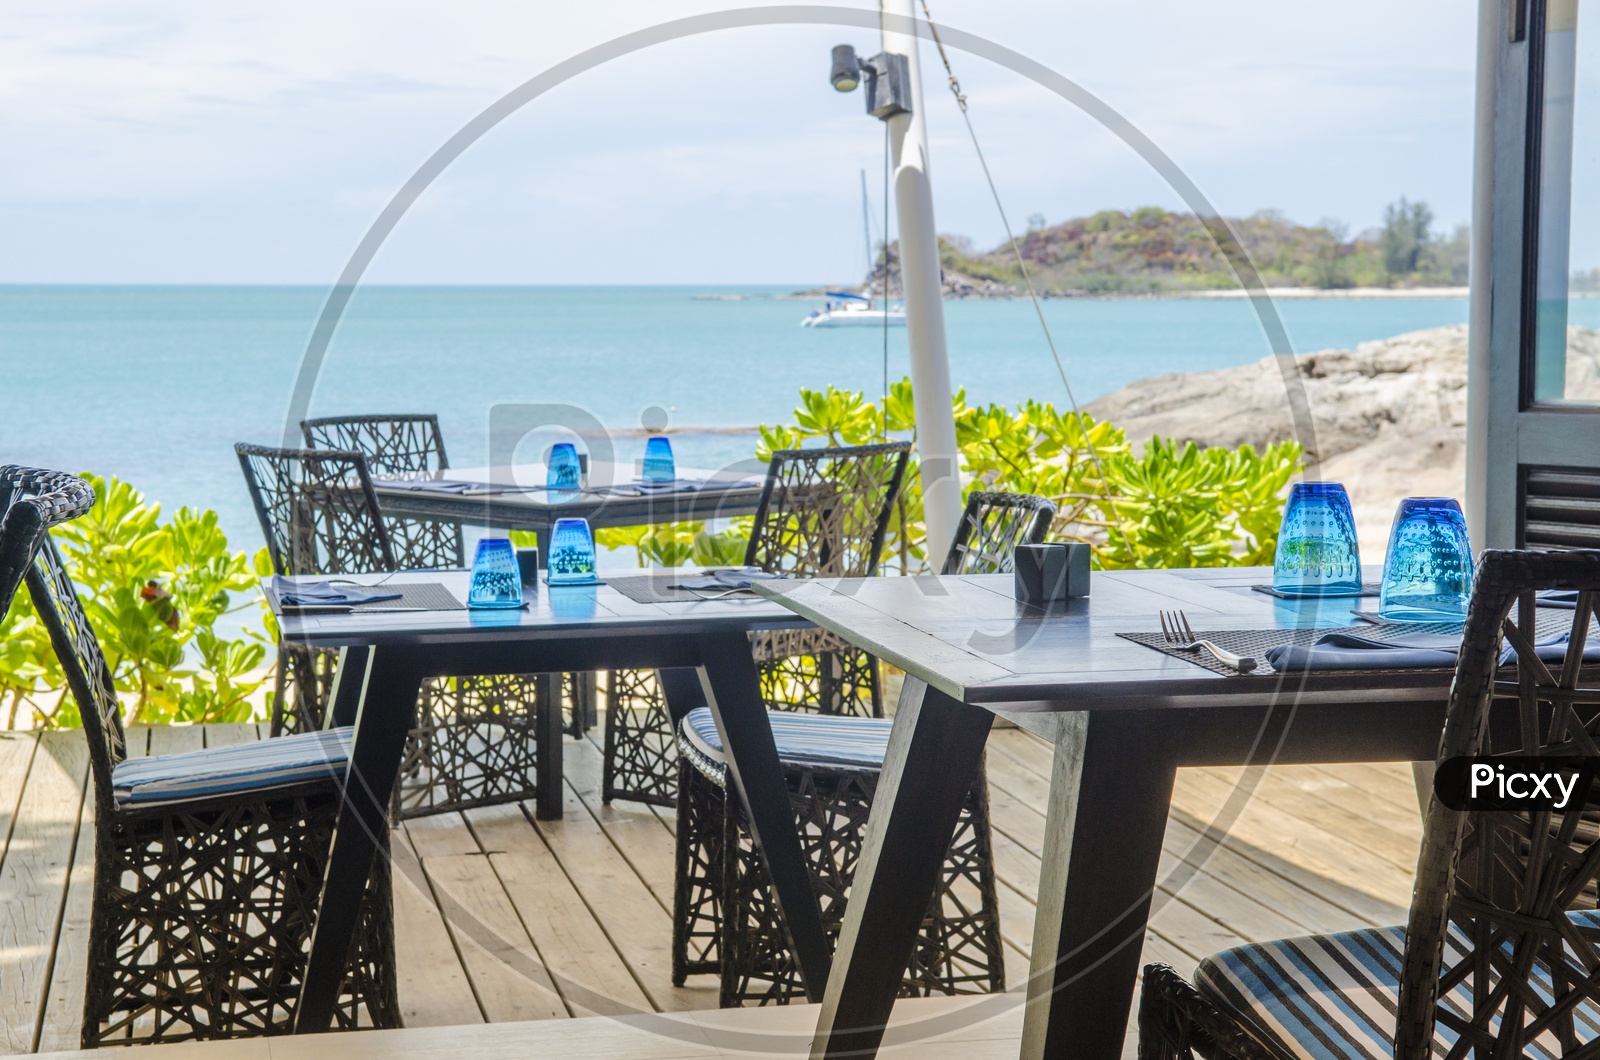 Diner table of a Thai Restaurant along the beach